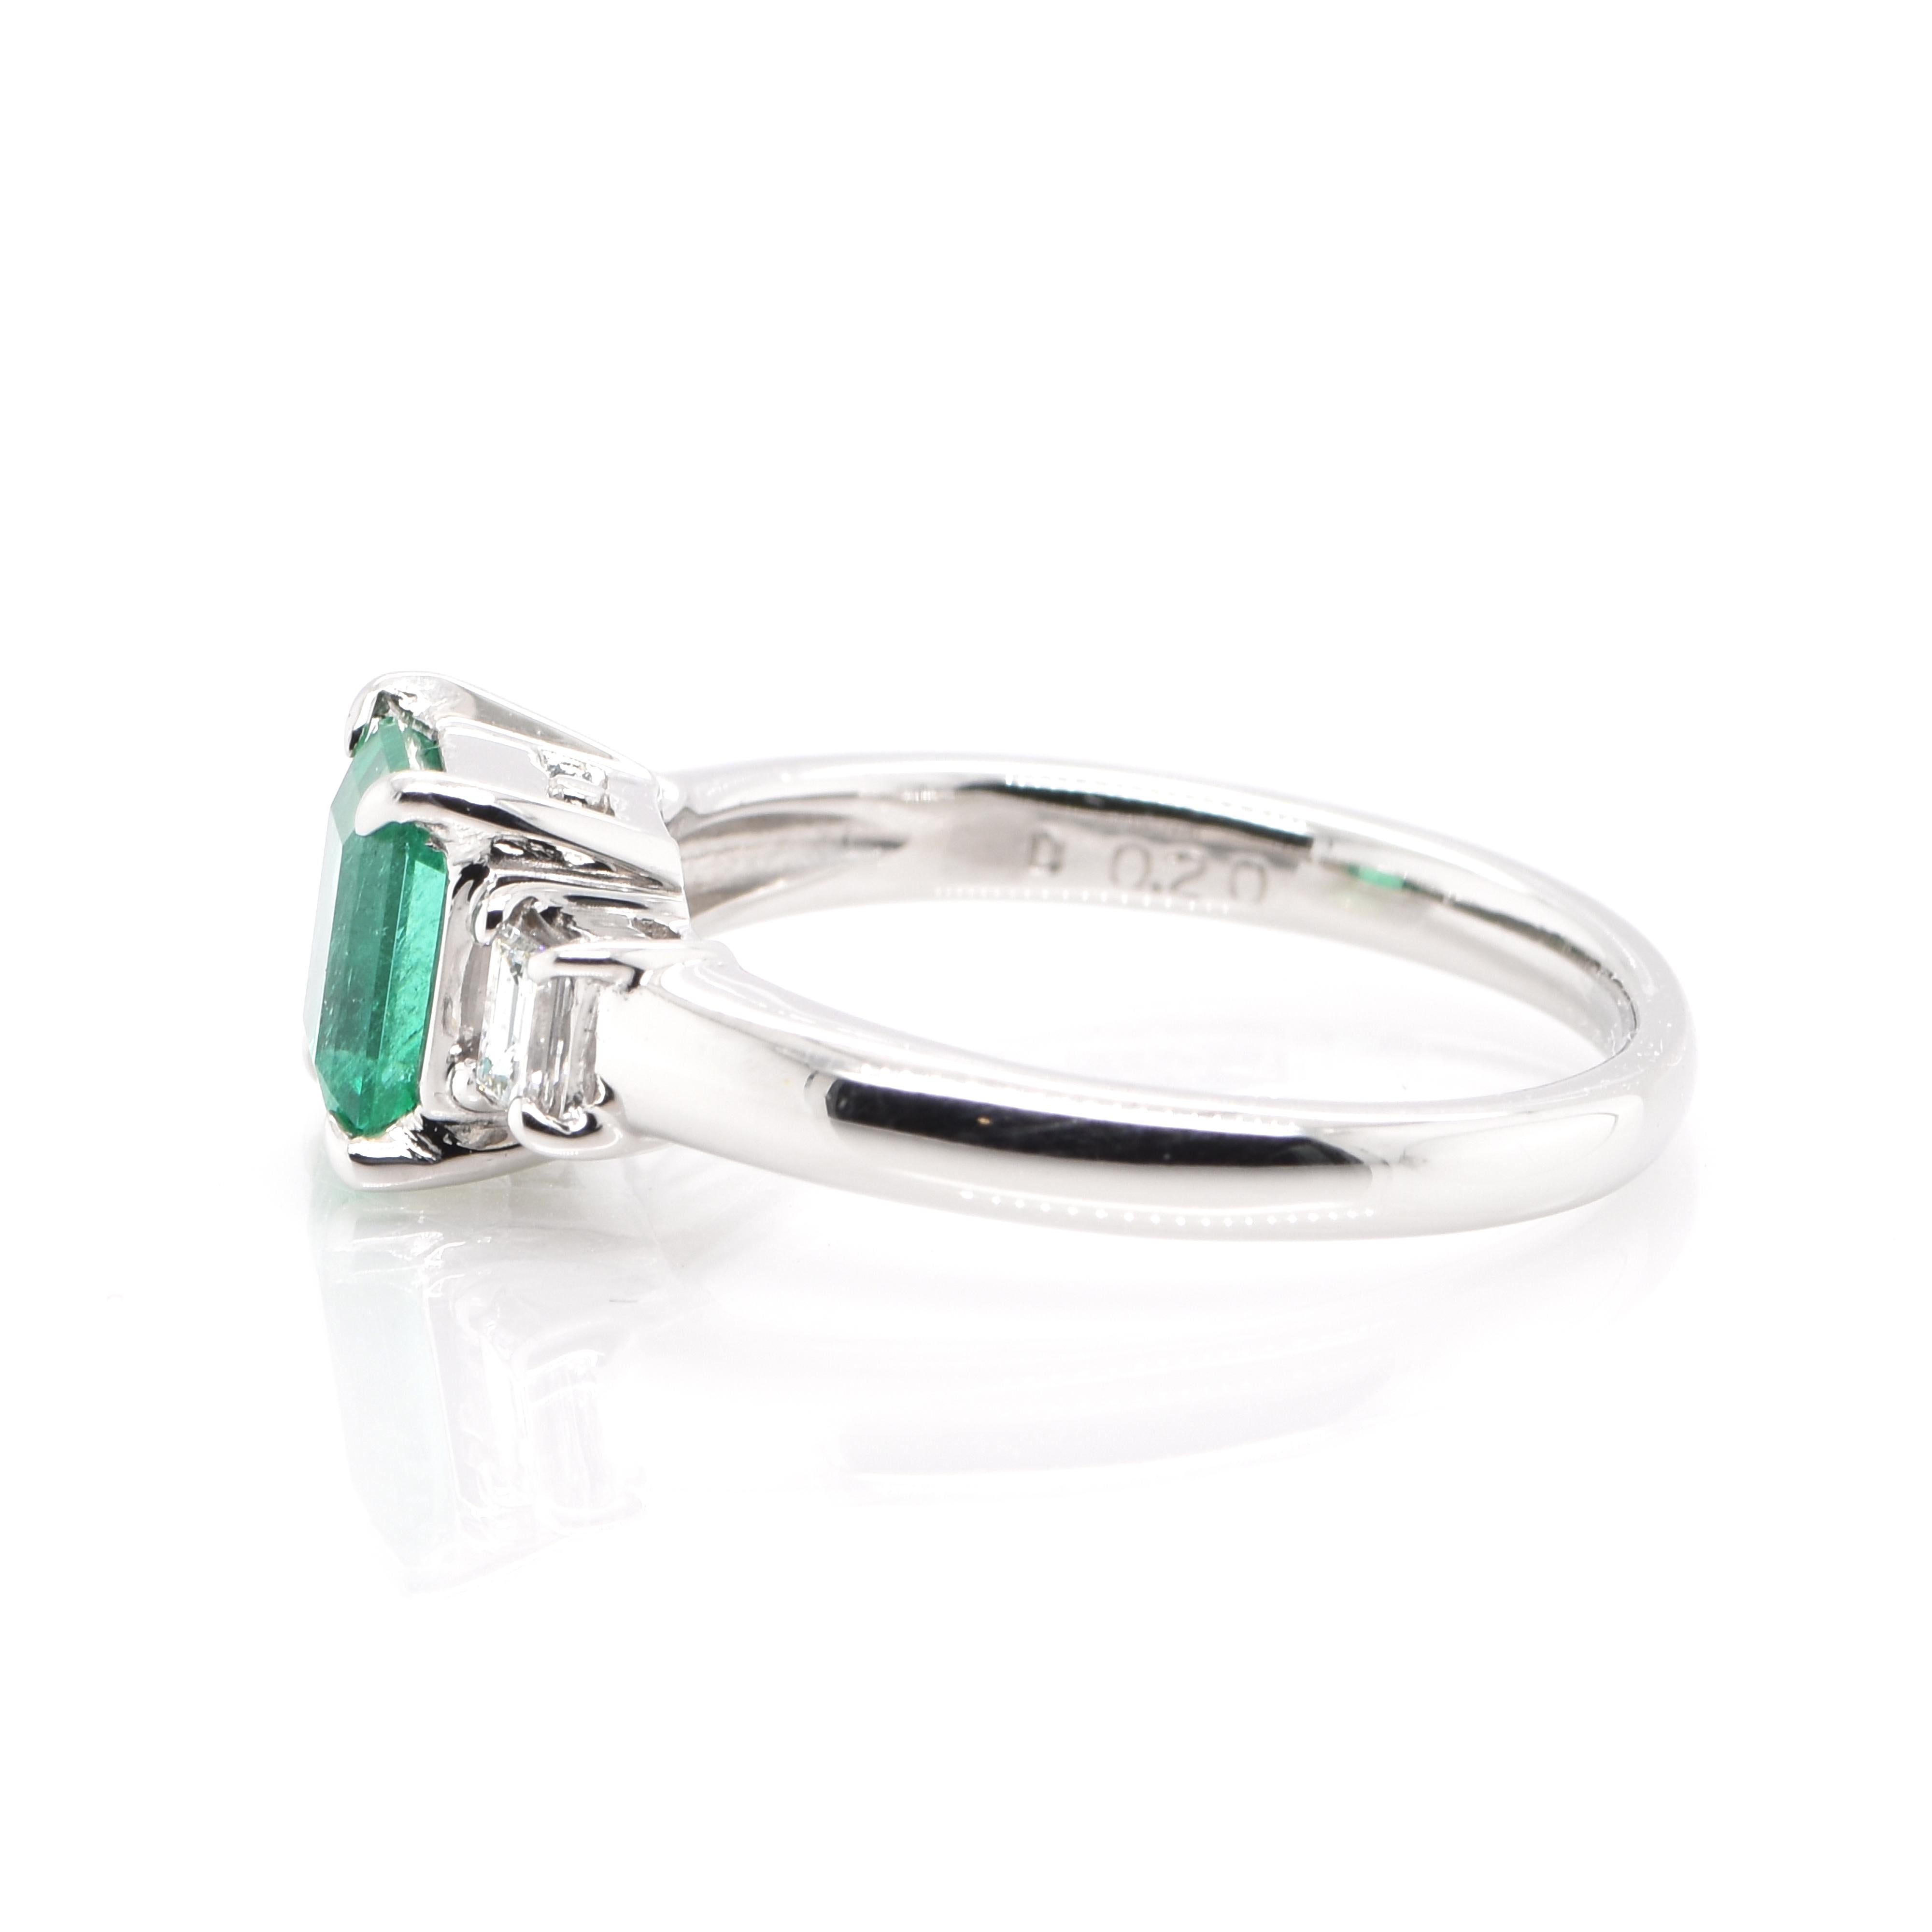 Emerald Cut 1.08 Carat Natural Colombian Emerald Three Stone Ring Set in Platinum